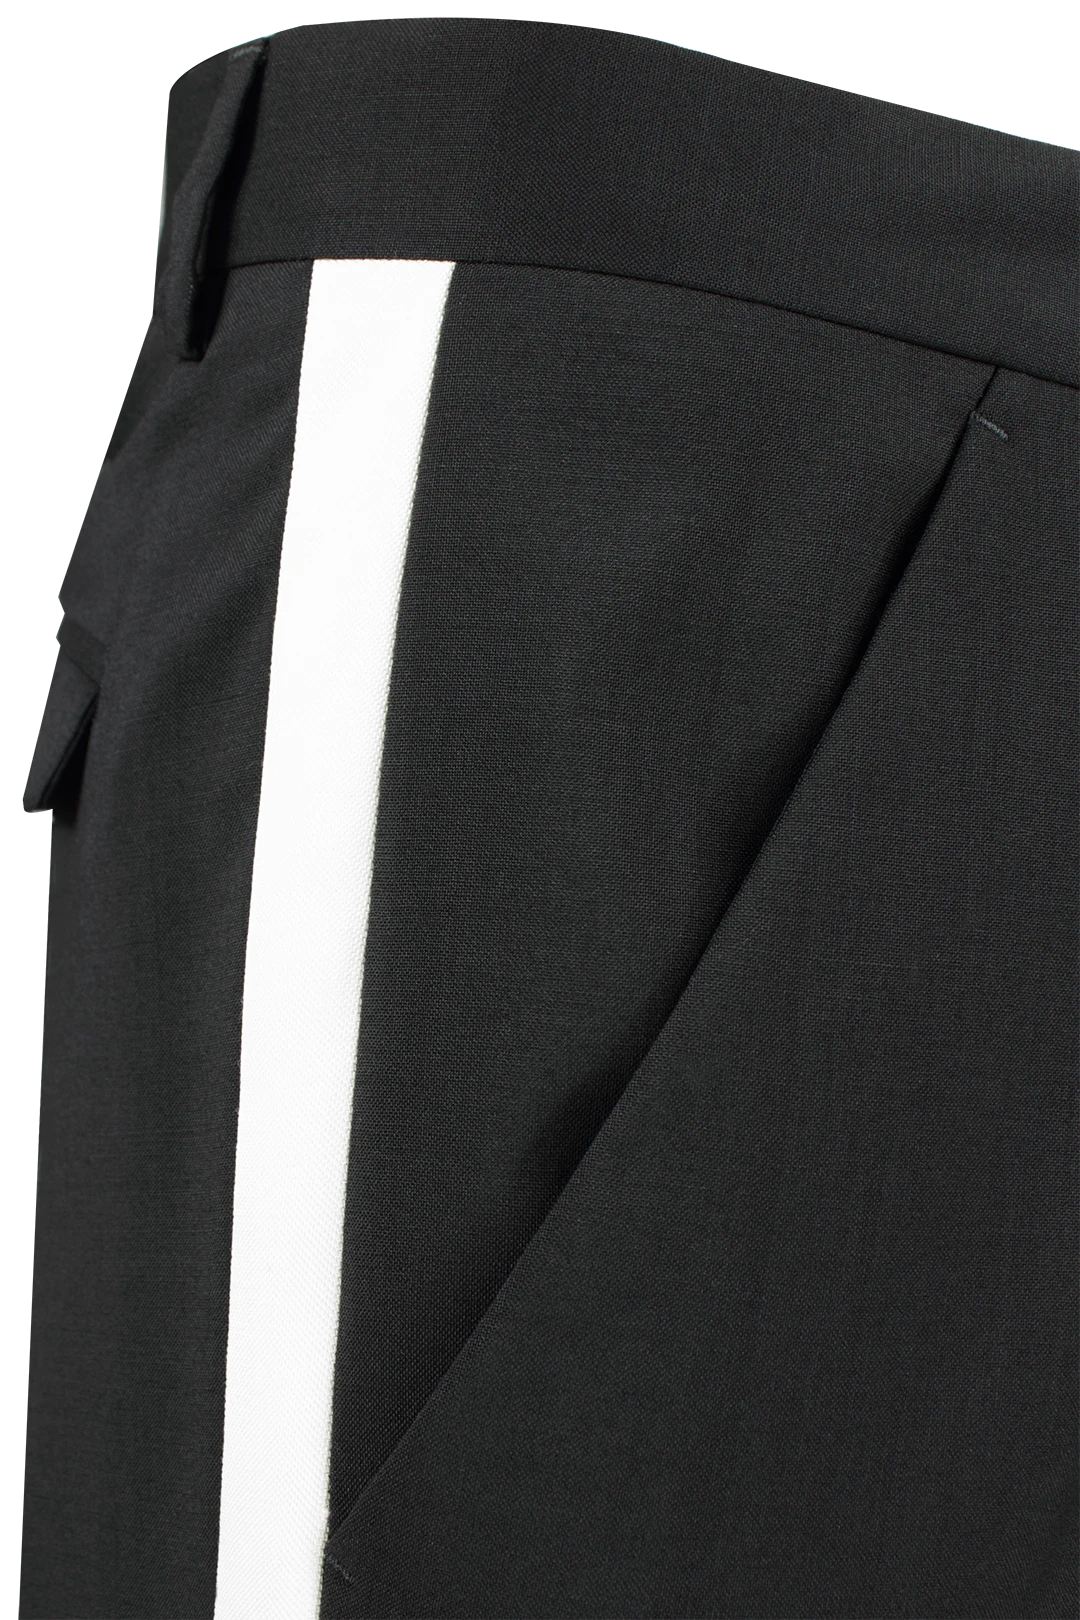 Pantalone in lana nera con banda laterale bianca tasca